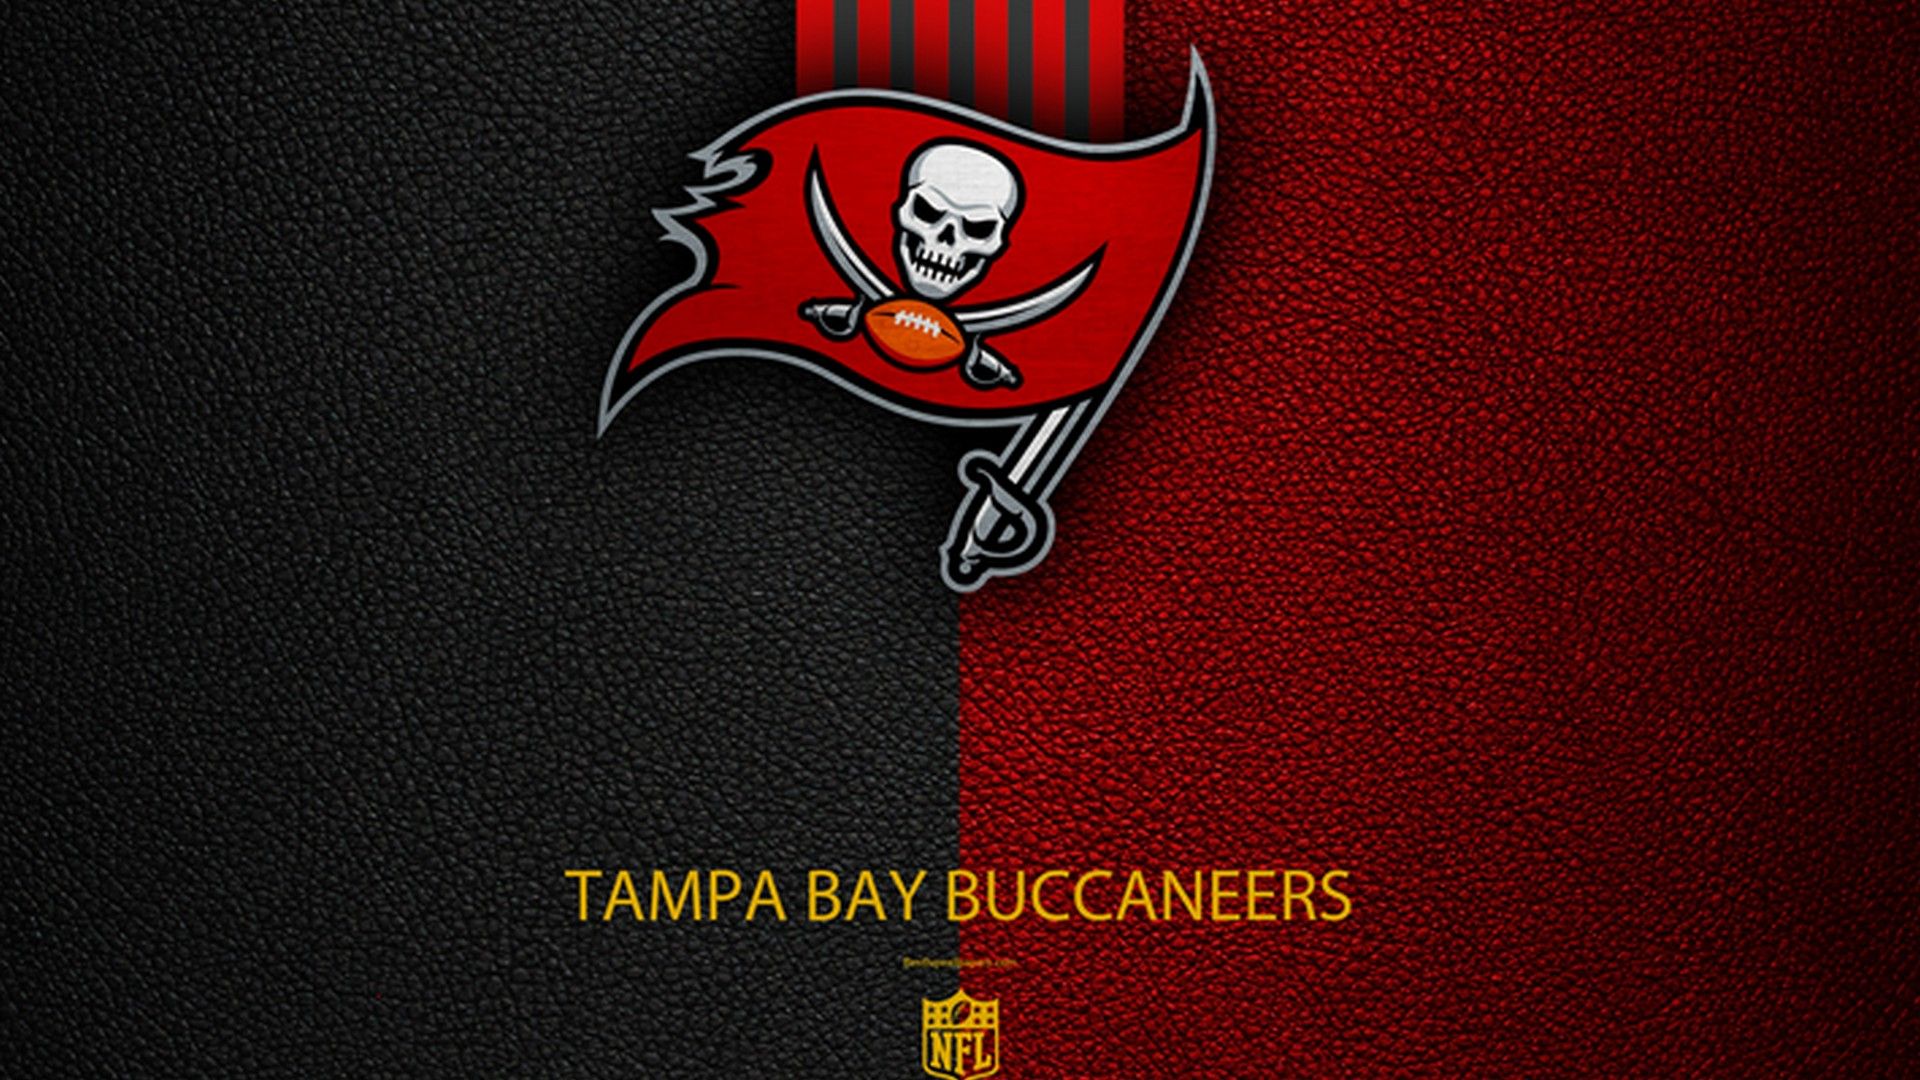 Tampa Bay Buccaneers Wallpaper For Mac Background NFL Football Wallpaper